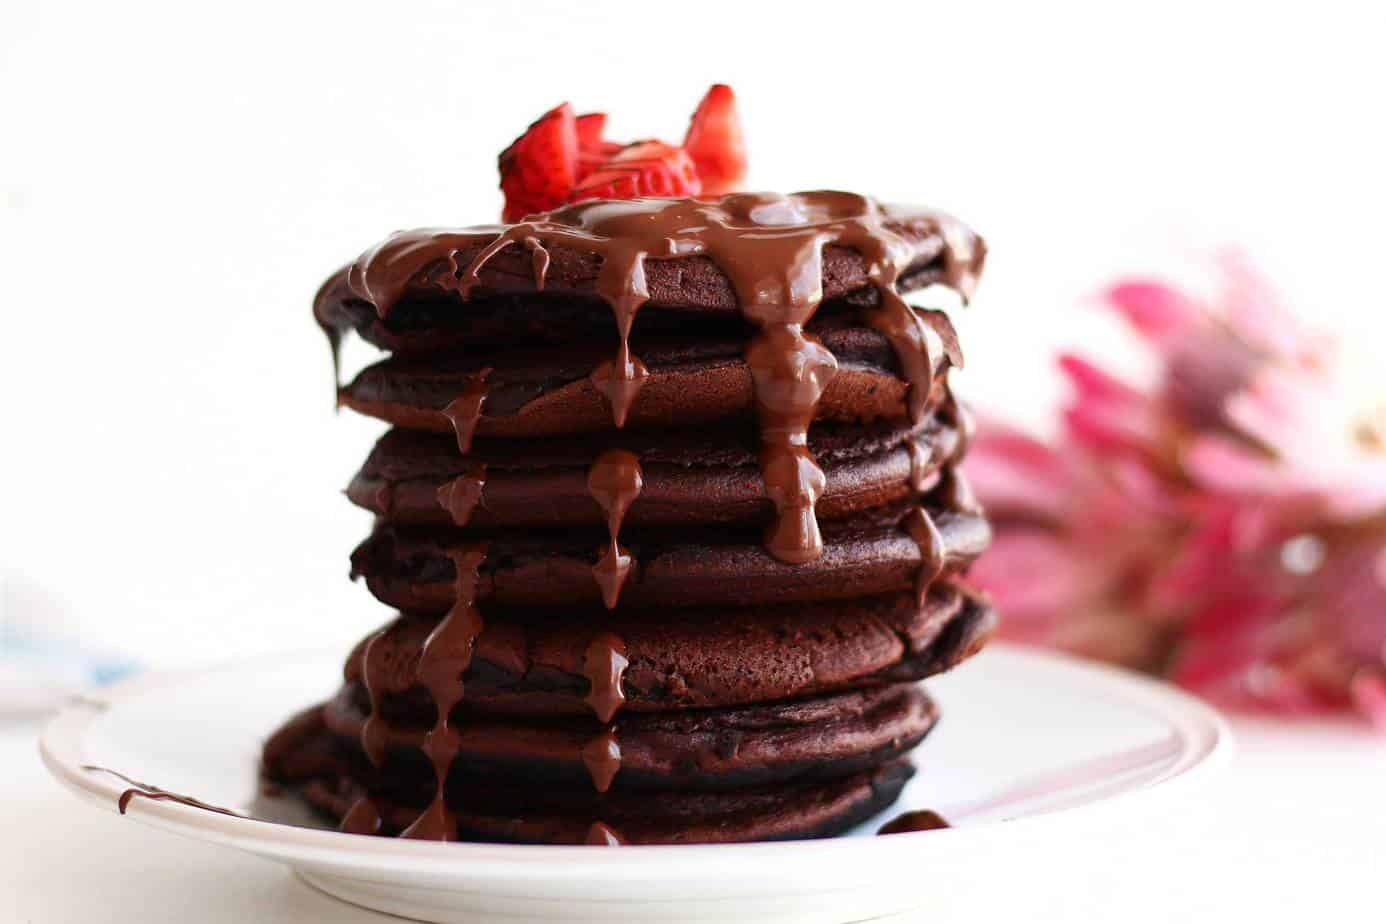 Gluten- free vegan chocolate pancakes - an easy, delicious healthy breakfast recipe